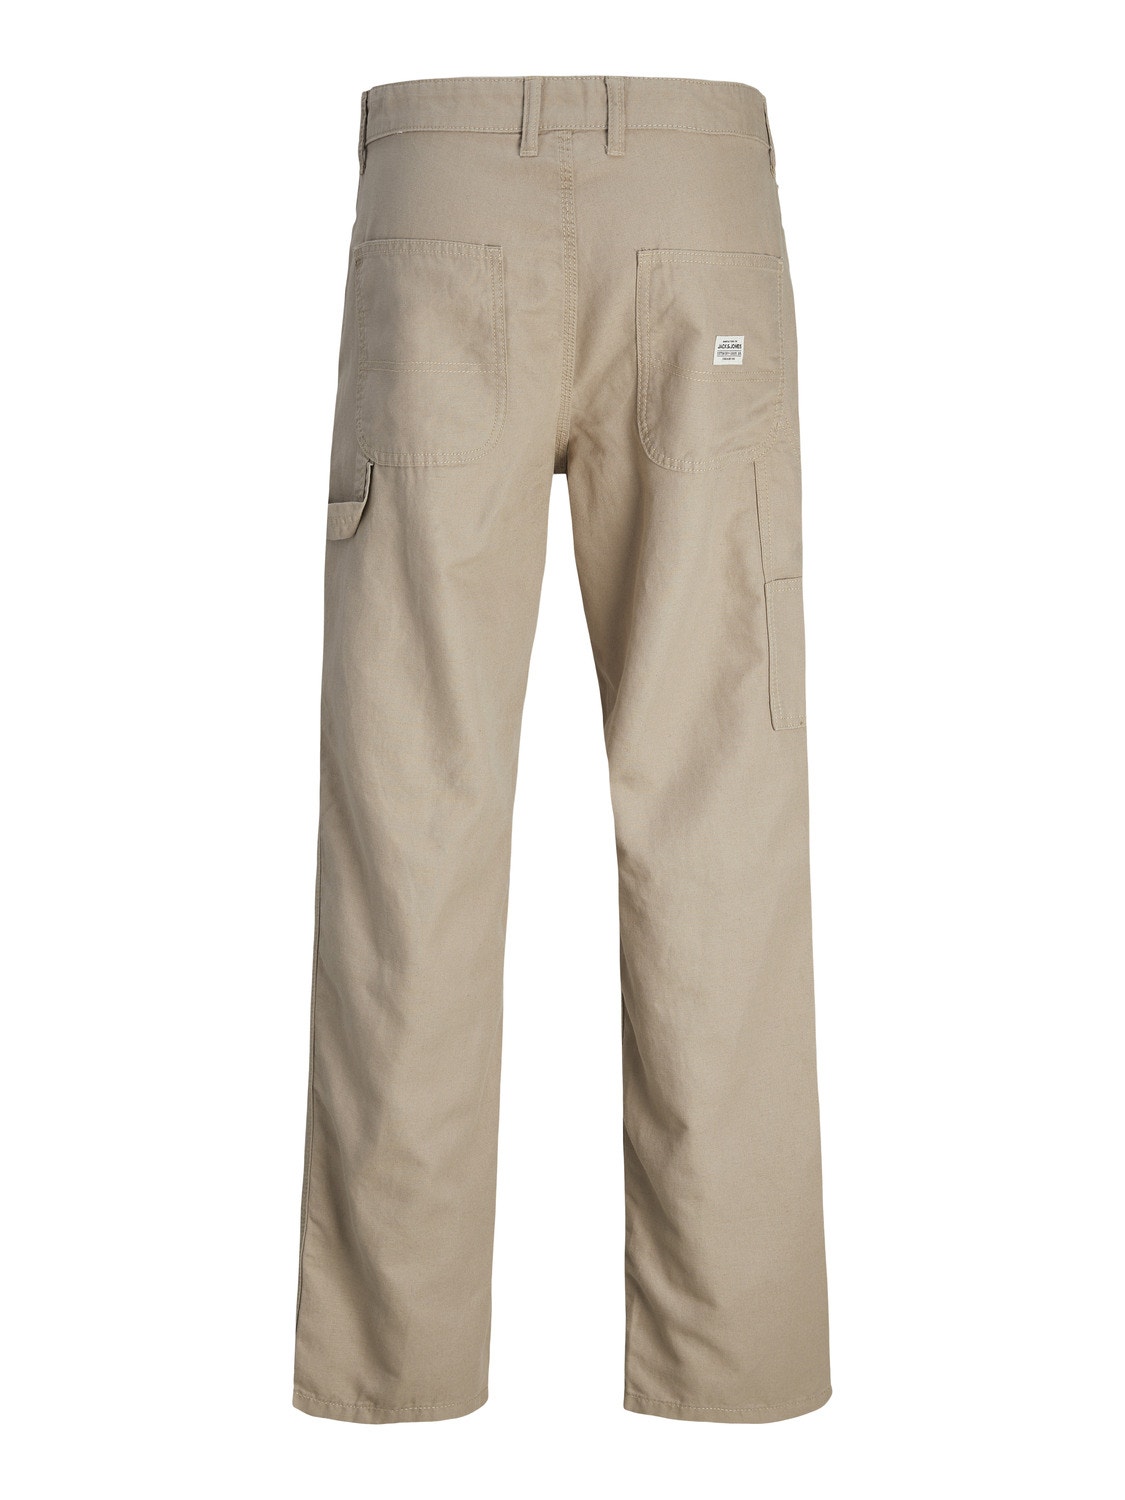 Jack & Jones Loose Fit 5 Pocket trousers -Crockery - 12255446